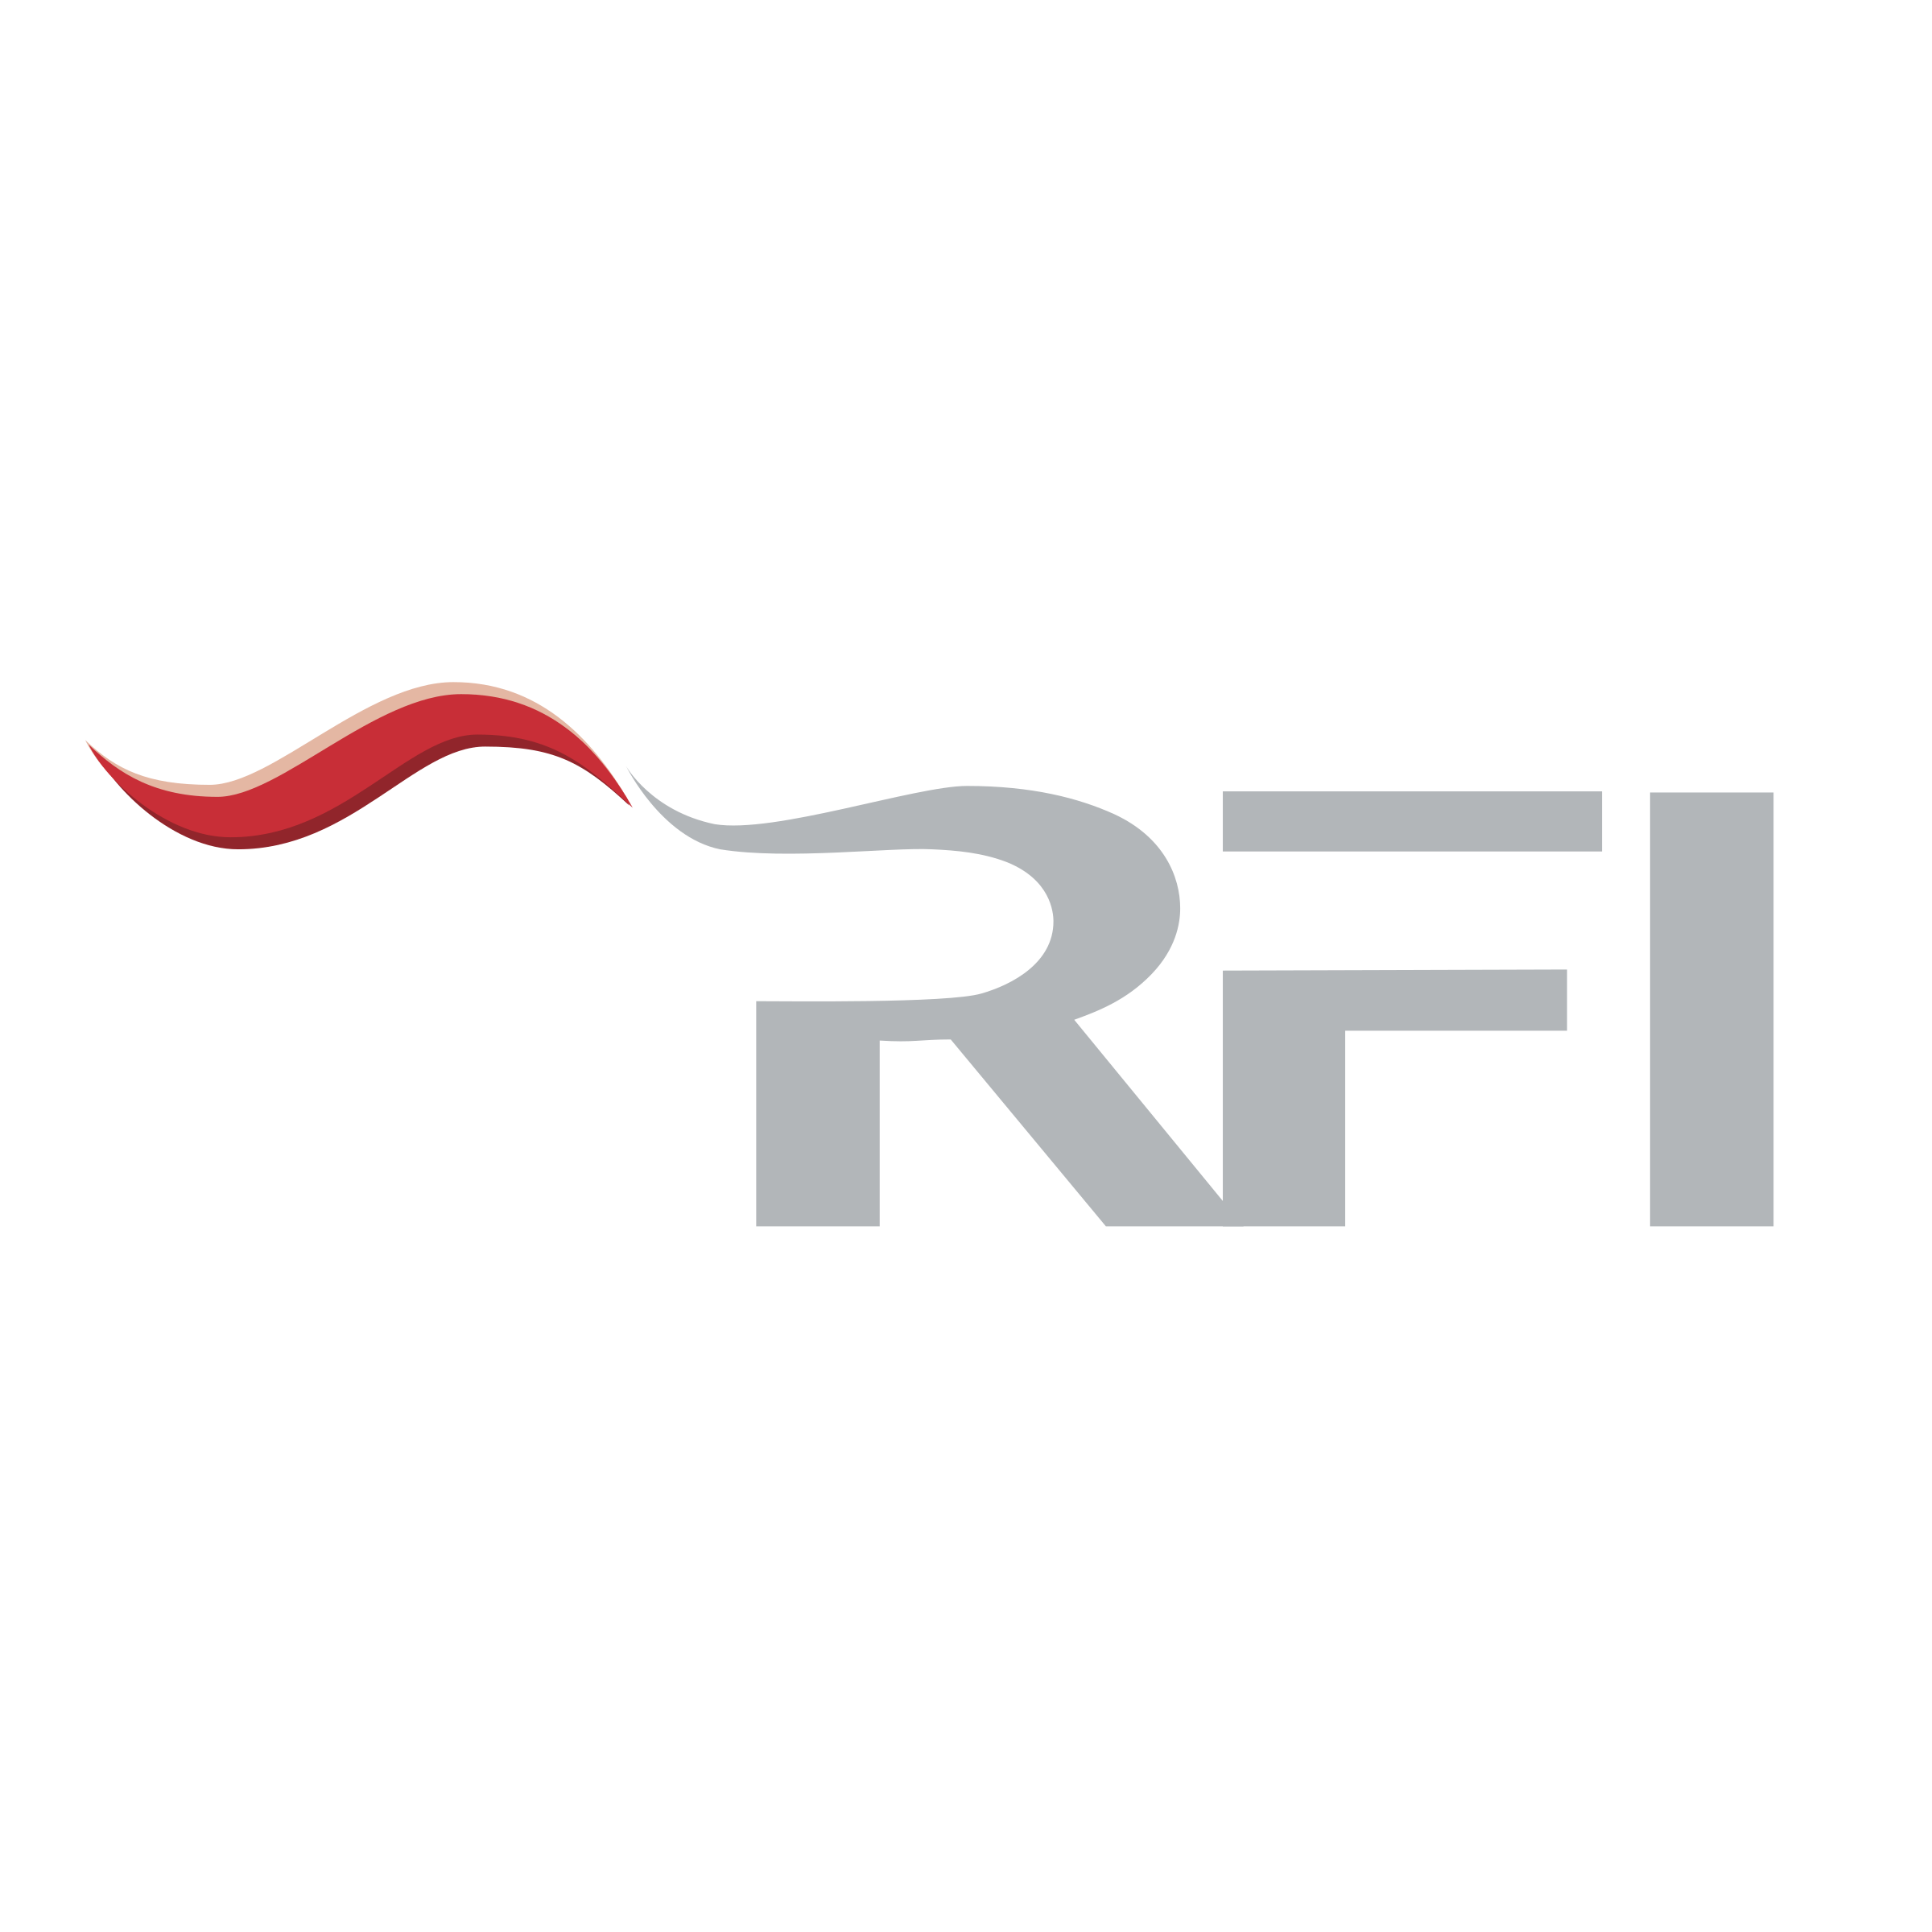 RFI Logo - RFI Logo PNG Transparent & SVG Vector - Freebie Supply